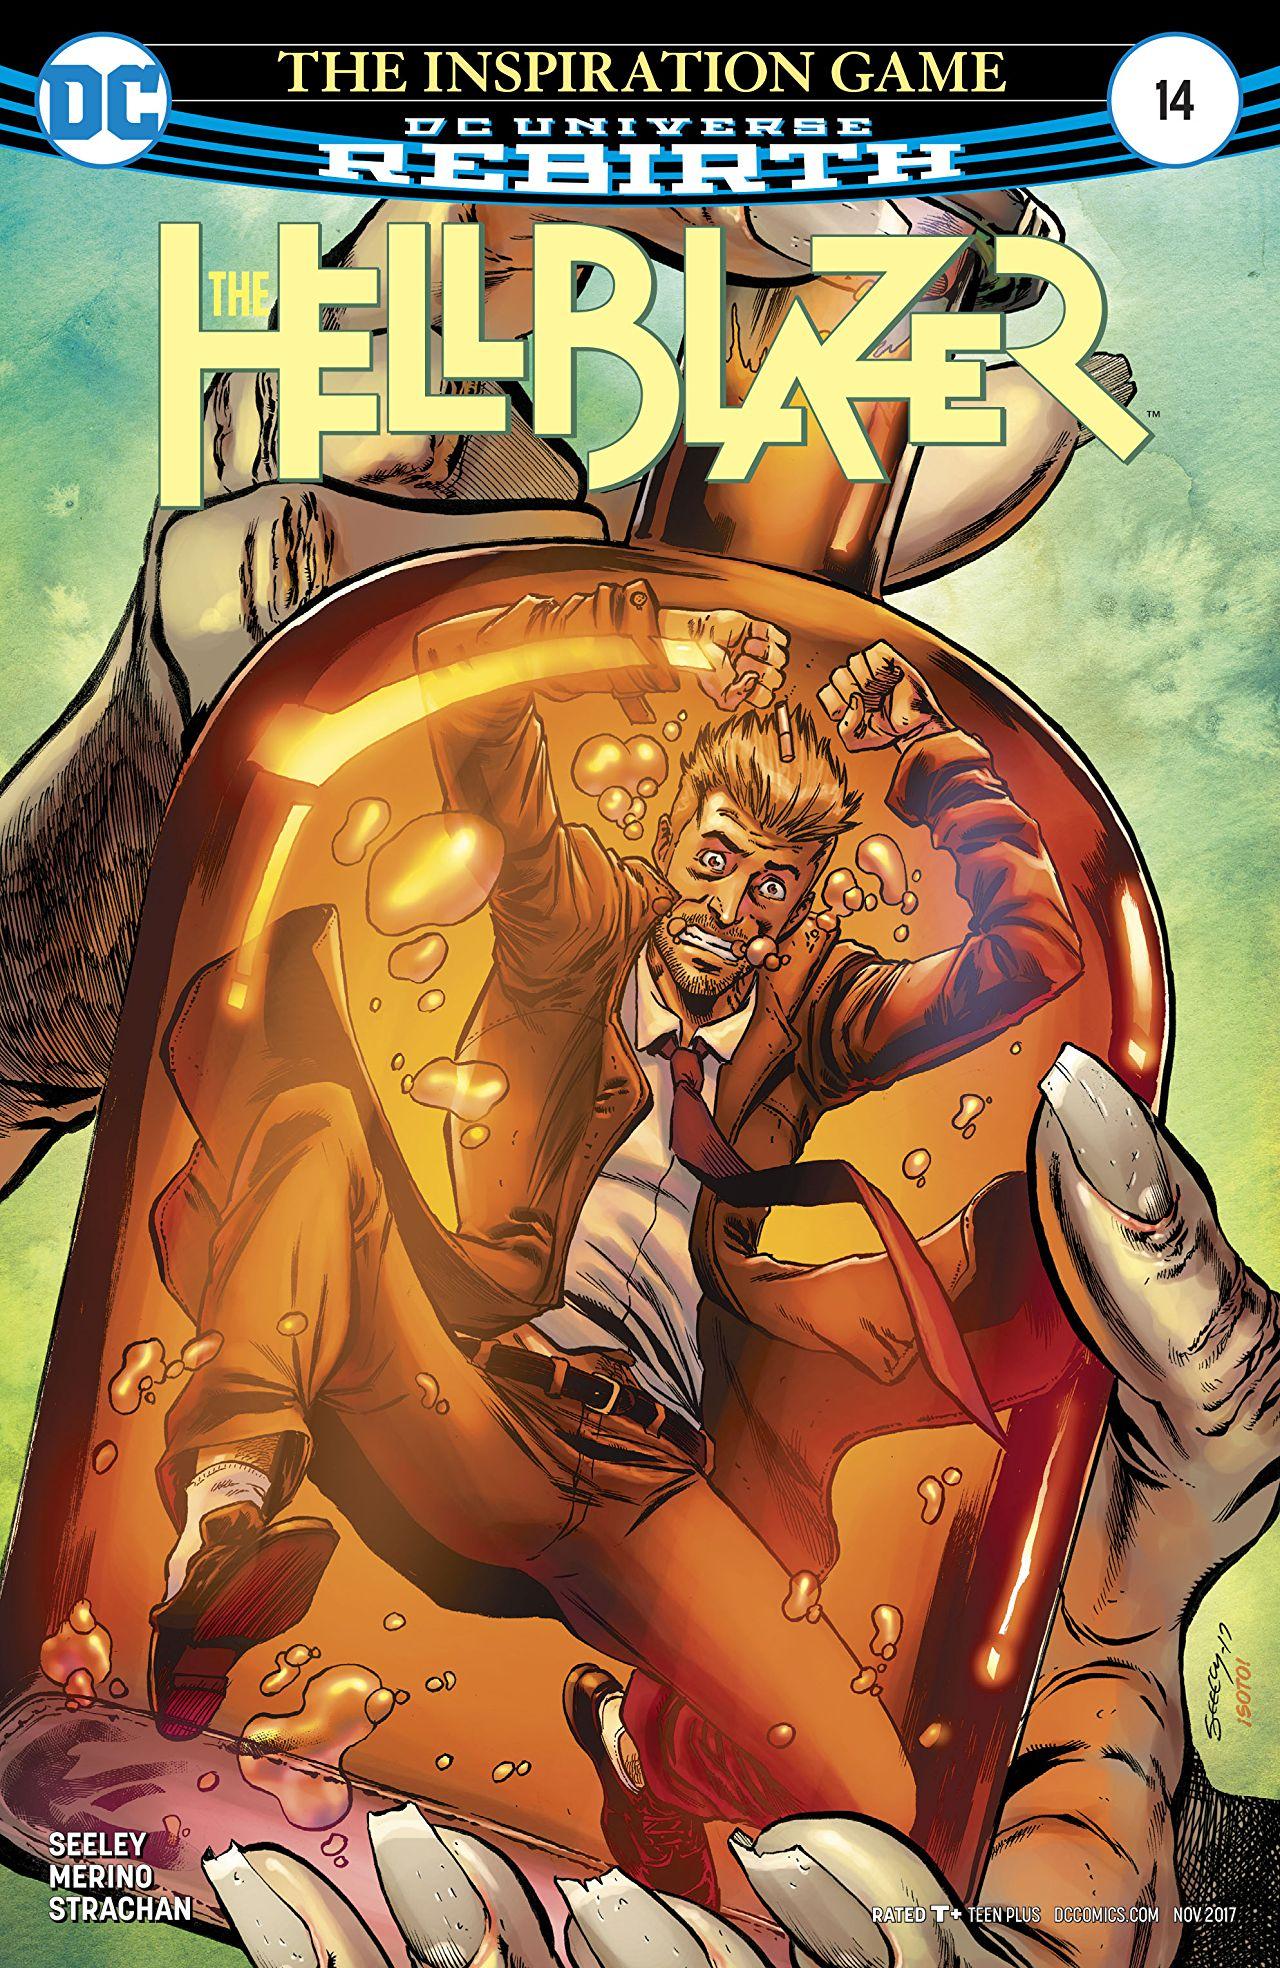 The Hellblazer Vol. 1 #14